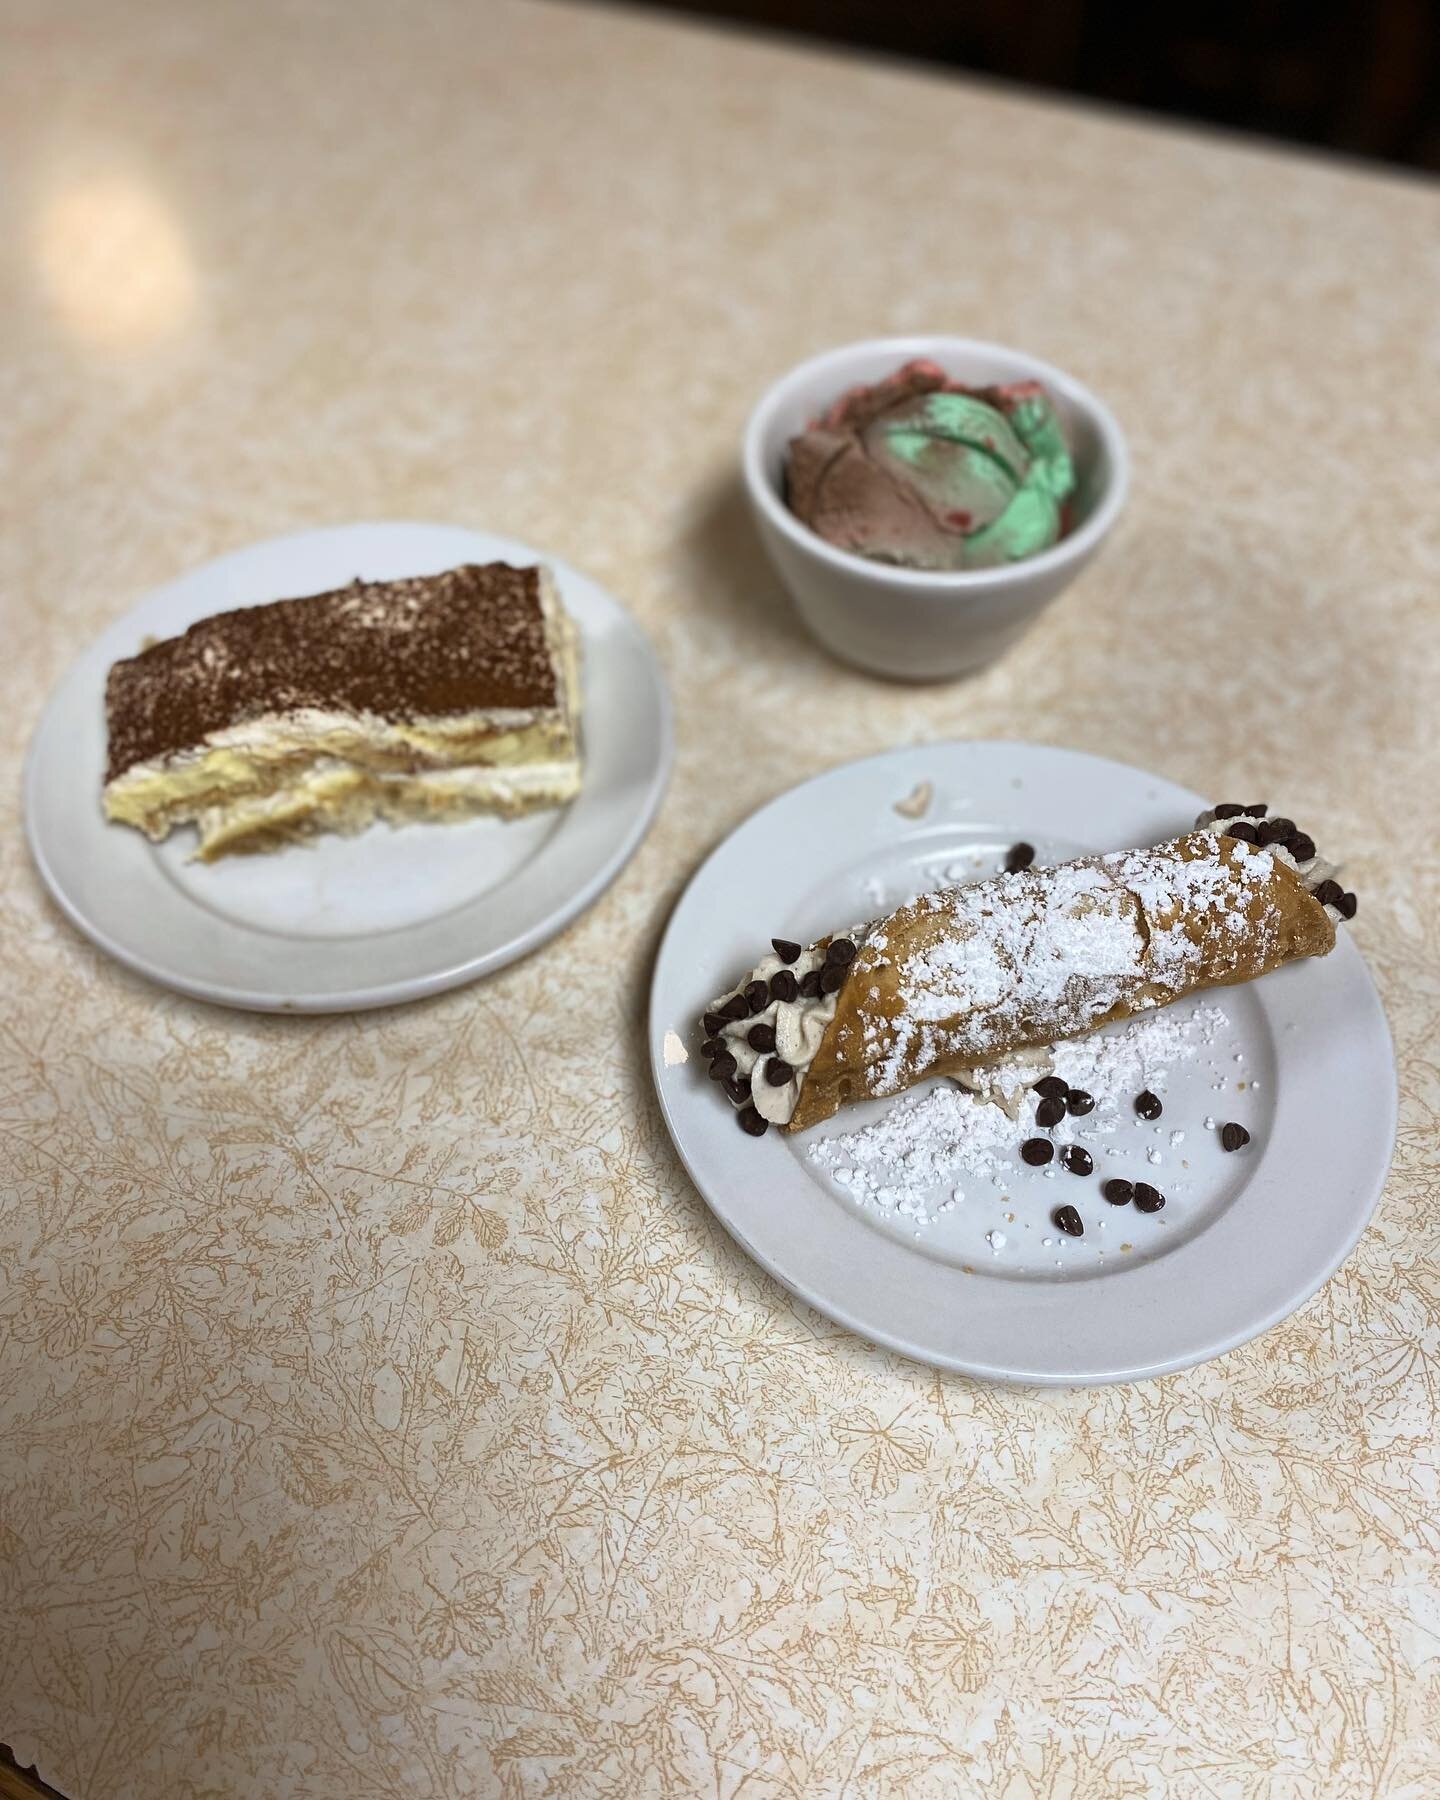 Did someone say dessert?
#tiramisu #cannoli #spummoni #brooklynpizza